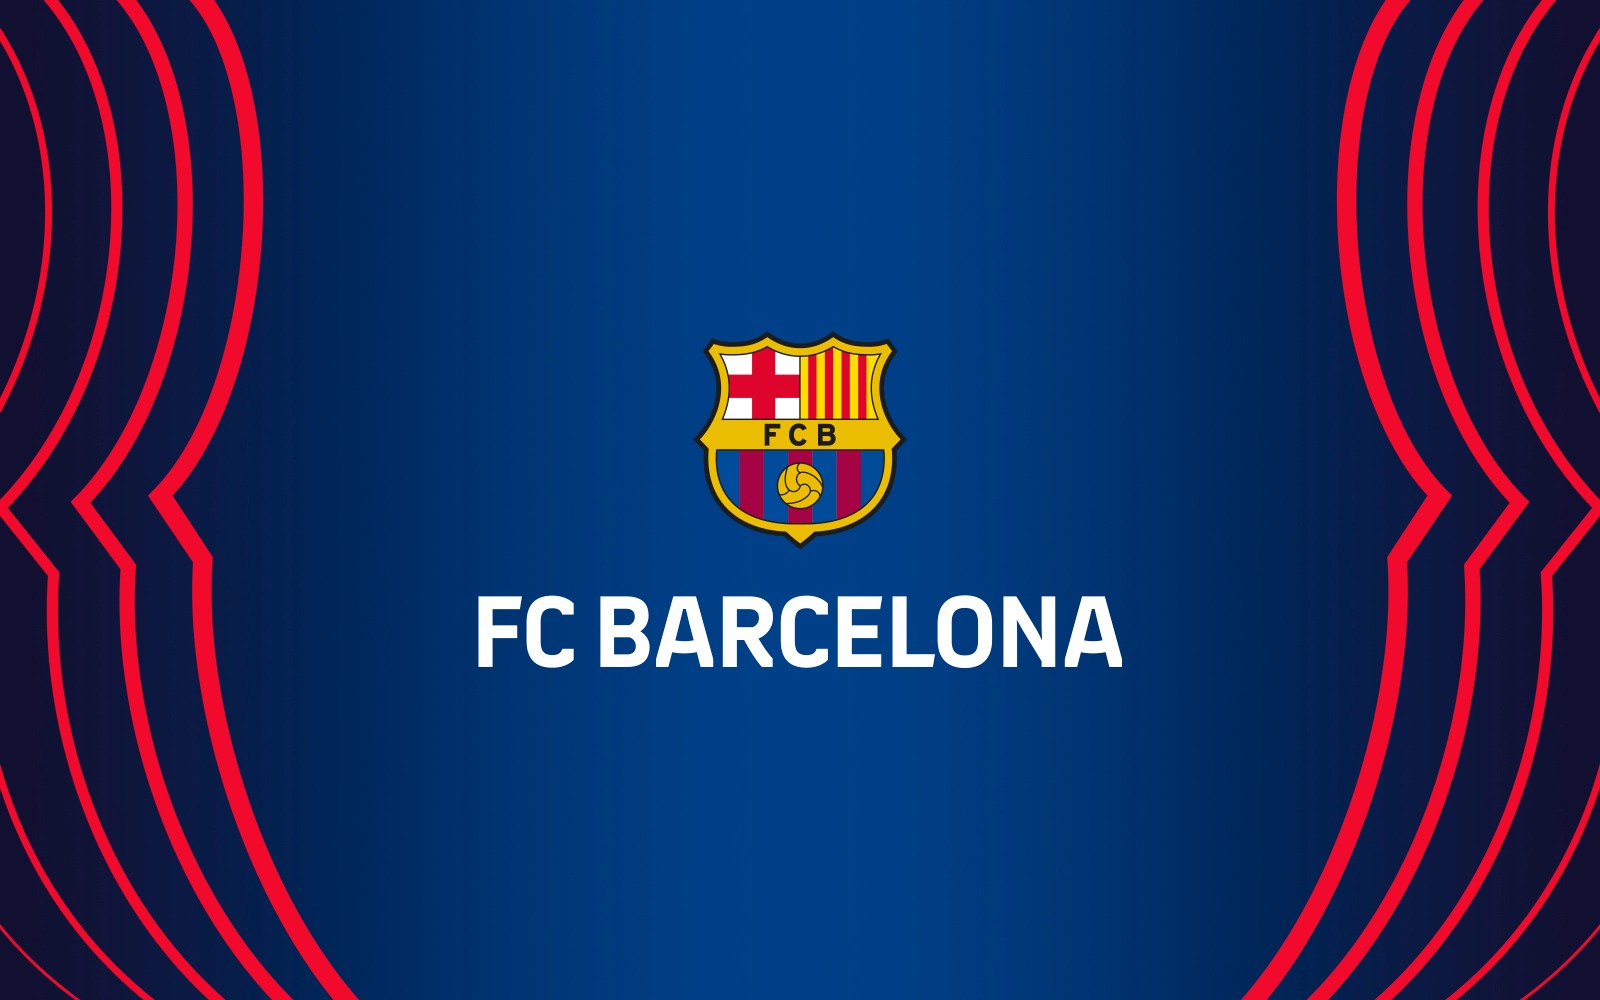 Barcelona release statement railing against La Liga’s deal with CVC